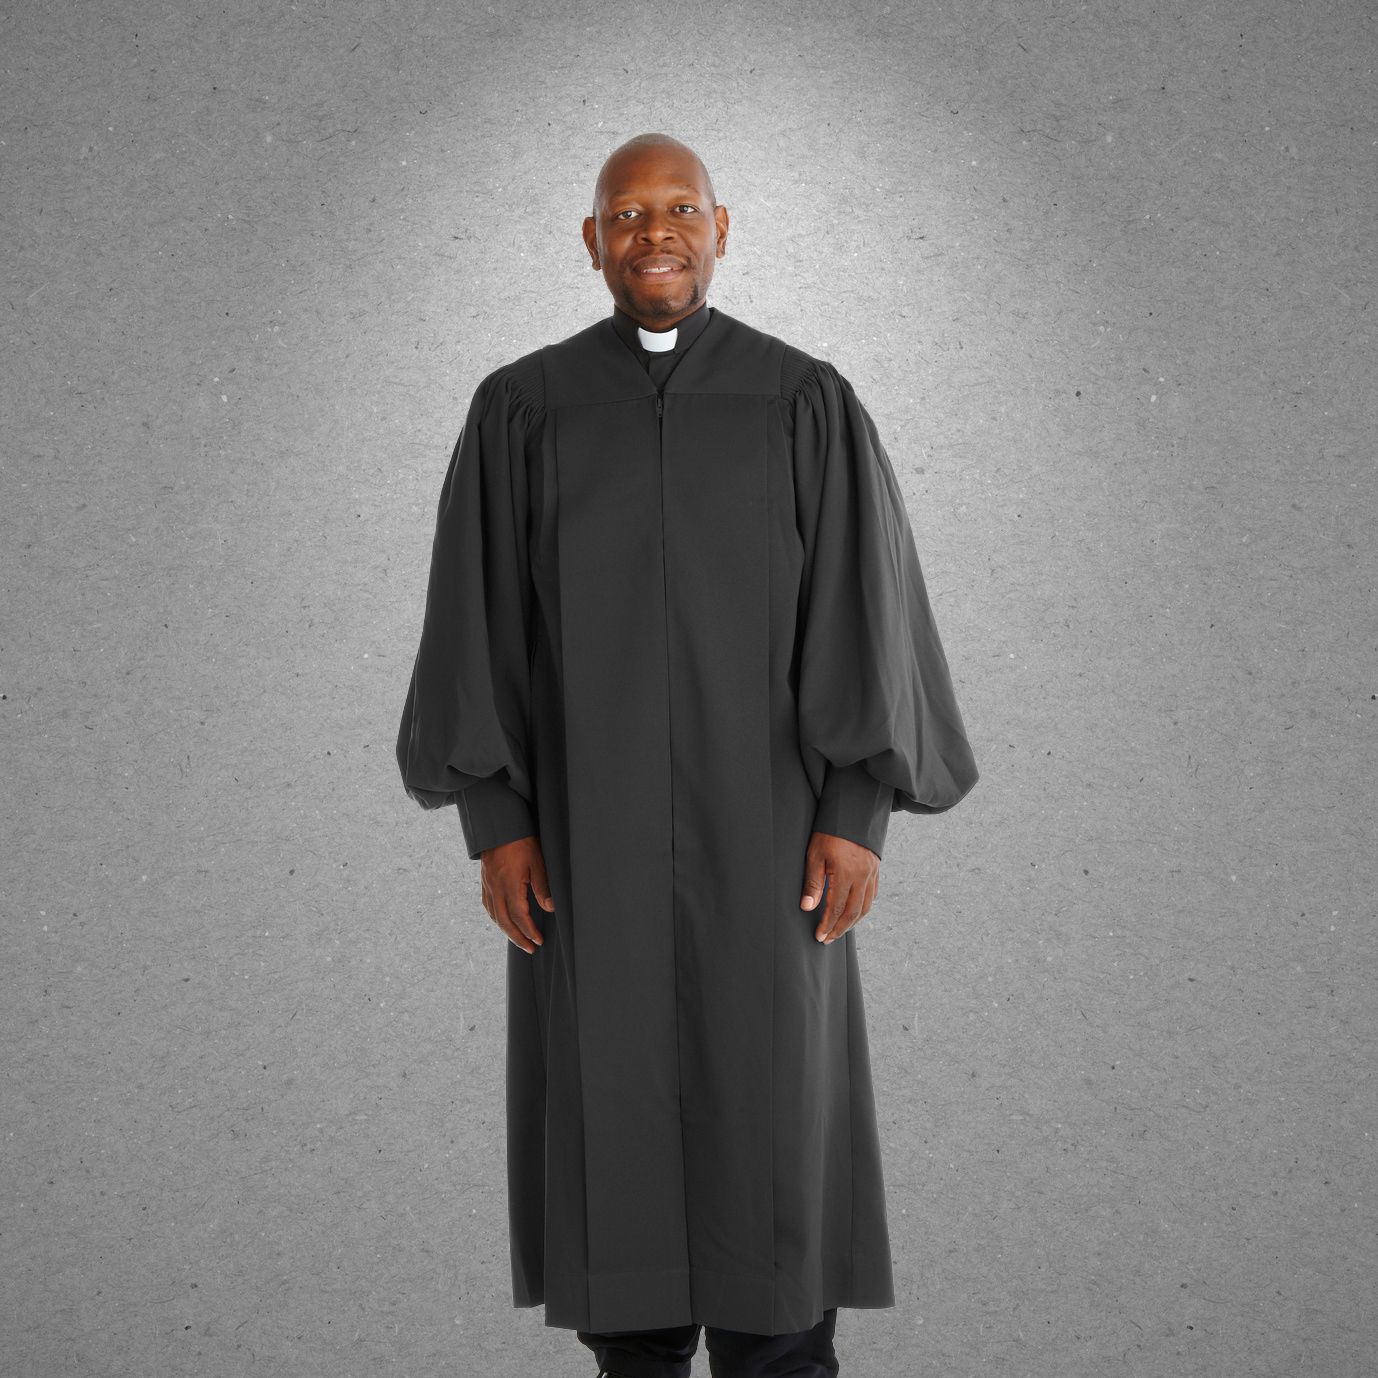 901 P. Men's & Women's Clergy Robe - Solid Black